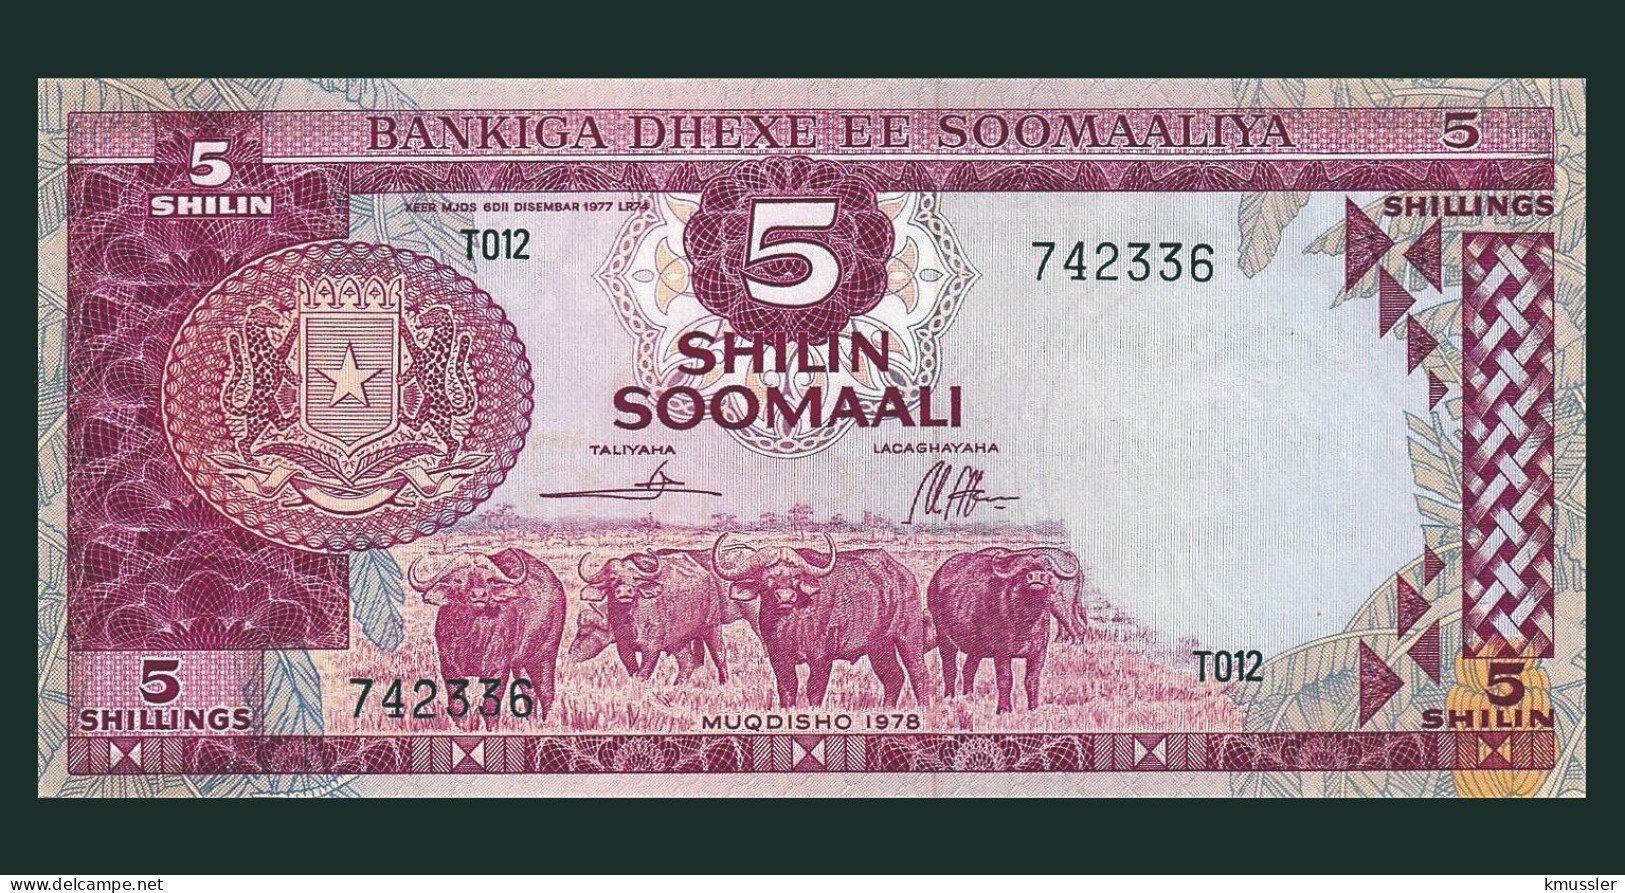 # # # Banknote Aus Somalia 5 Shillings 1978 (P-21) UNC # # # - Somalie